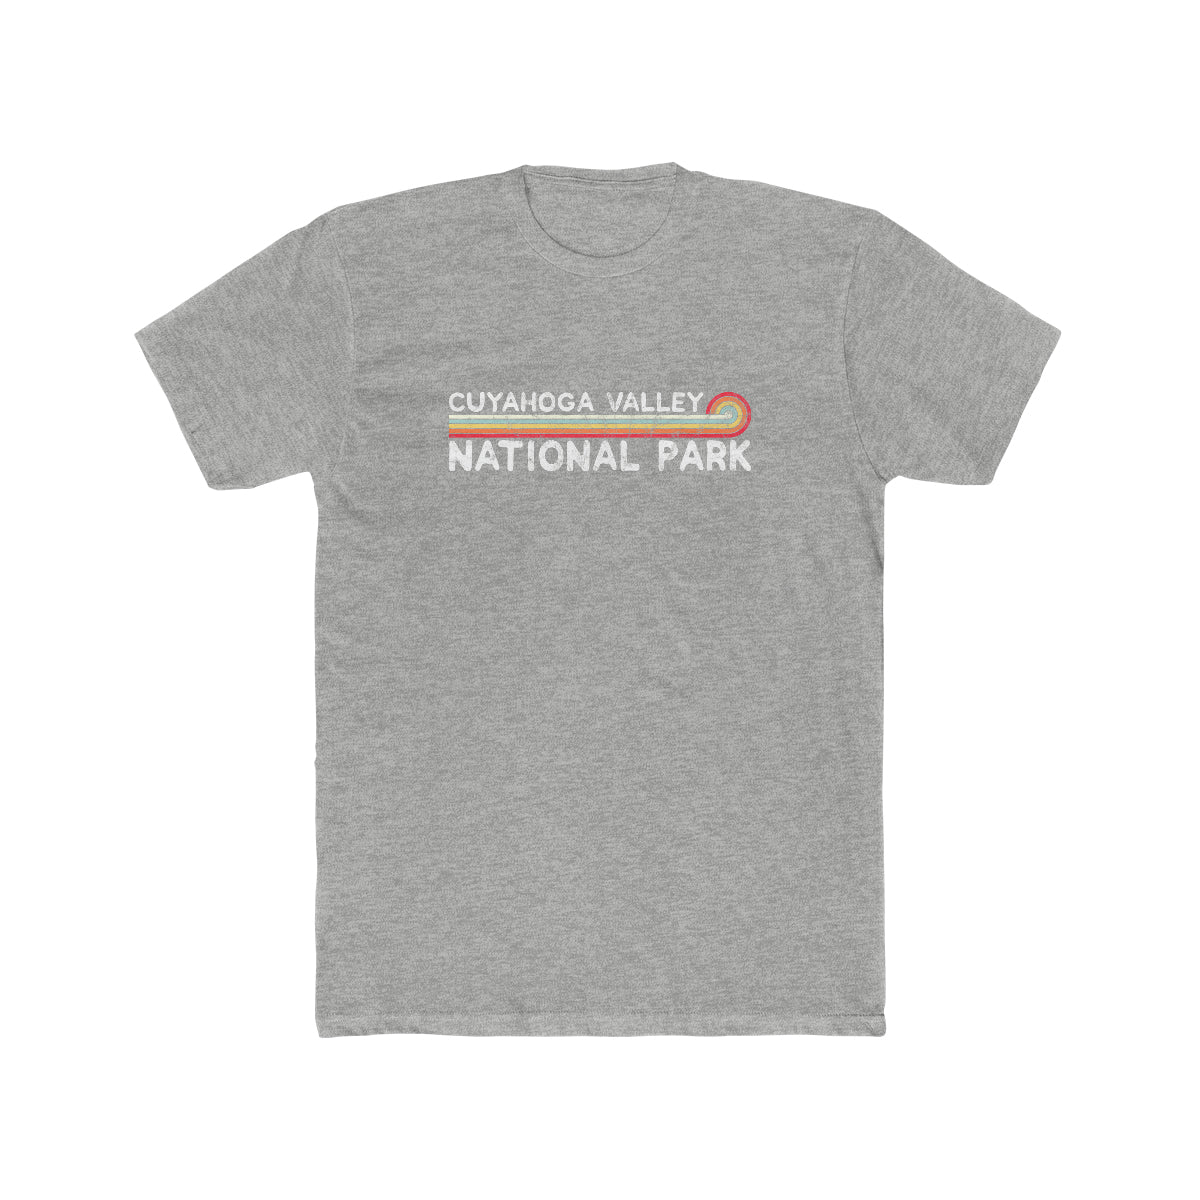 Cuyahoga Valley National Park T-Shirt - Vintage Stretched Sunrise